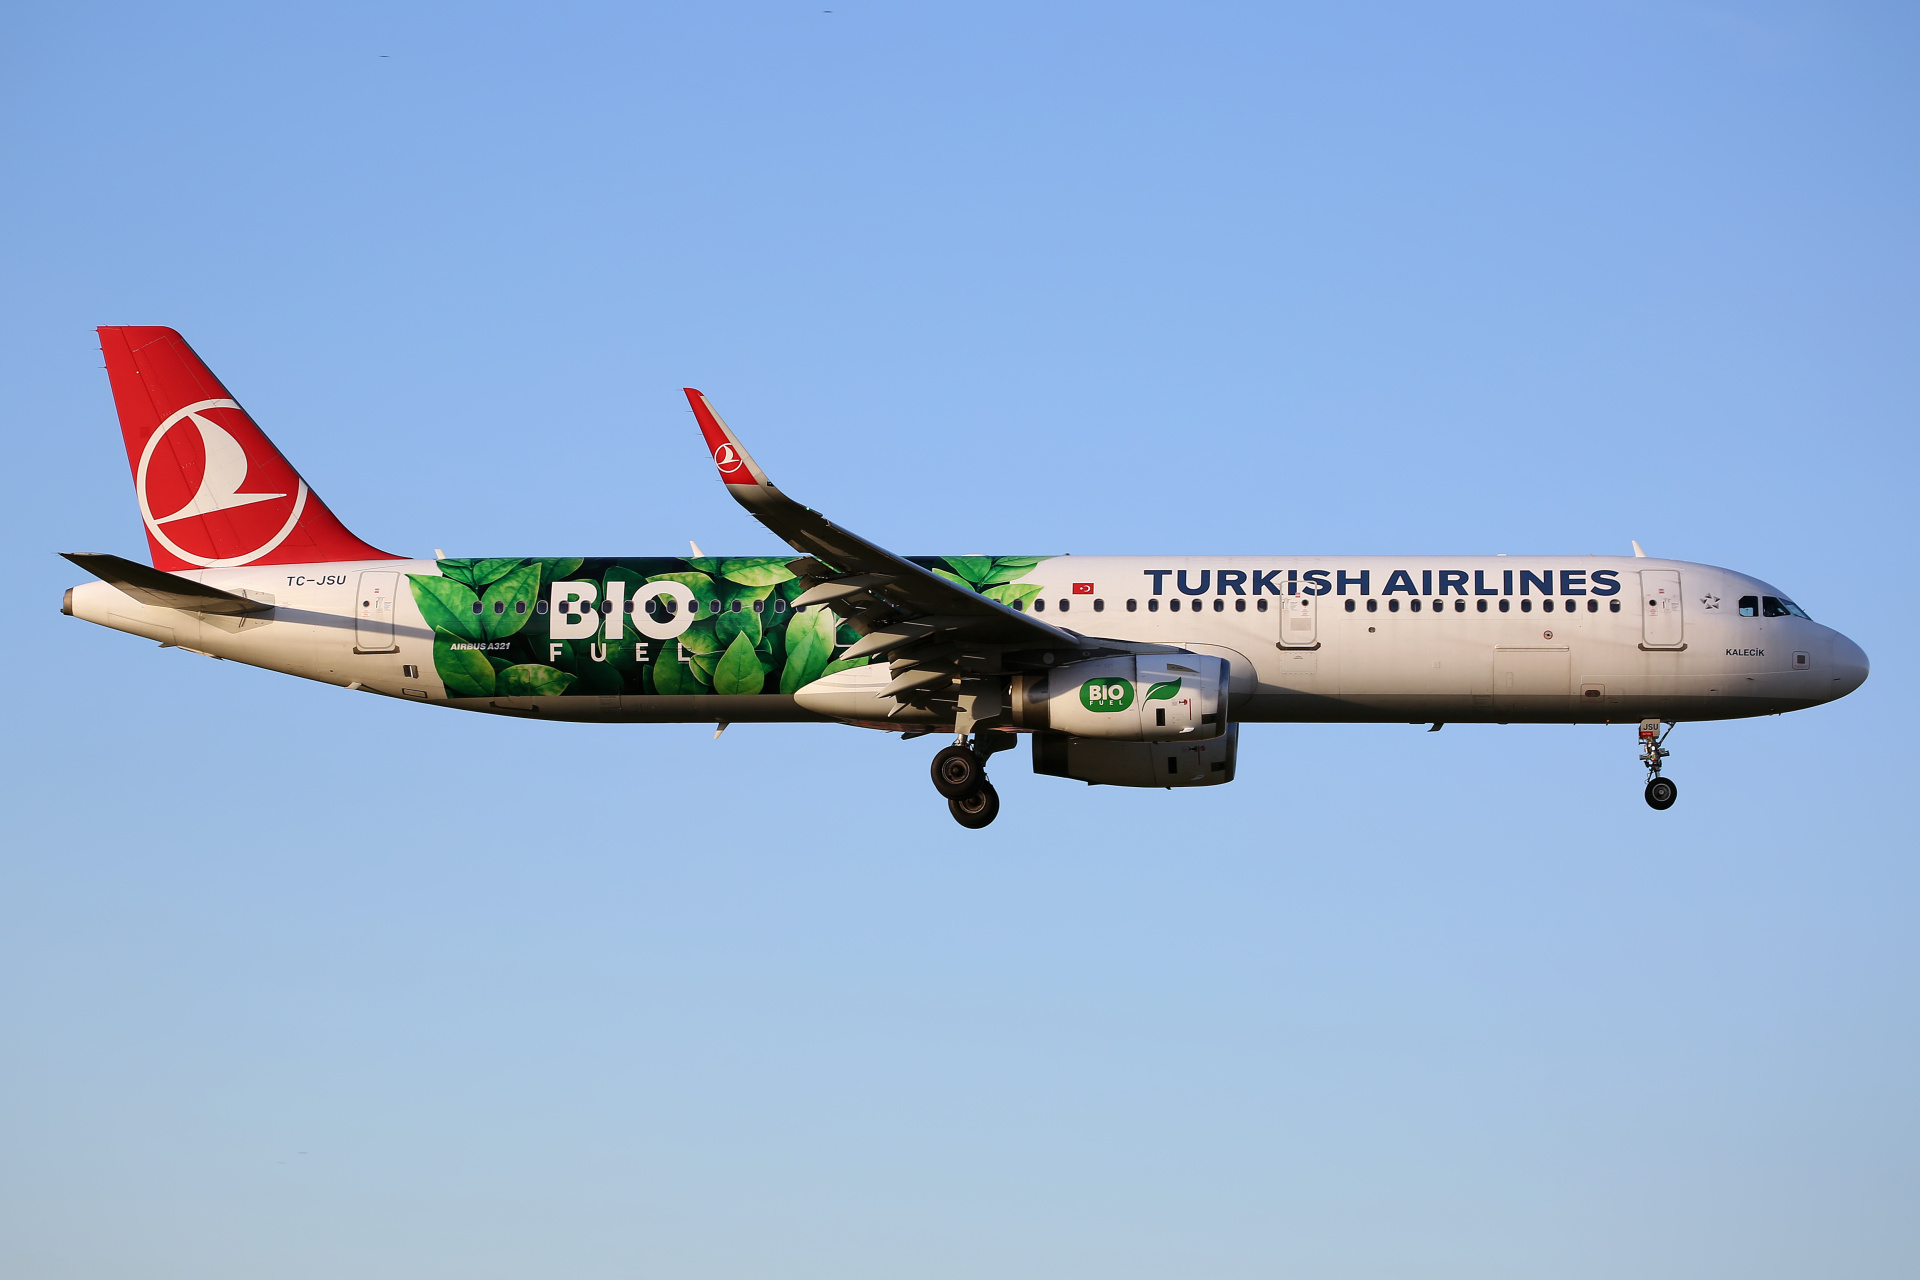 TC-JSU (Bio Fuel livery) (Aircraft » EPWA Spotting » Airbus A321-200 » THY Turkish Airlines)